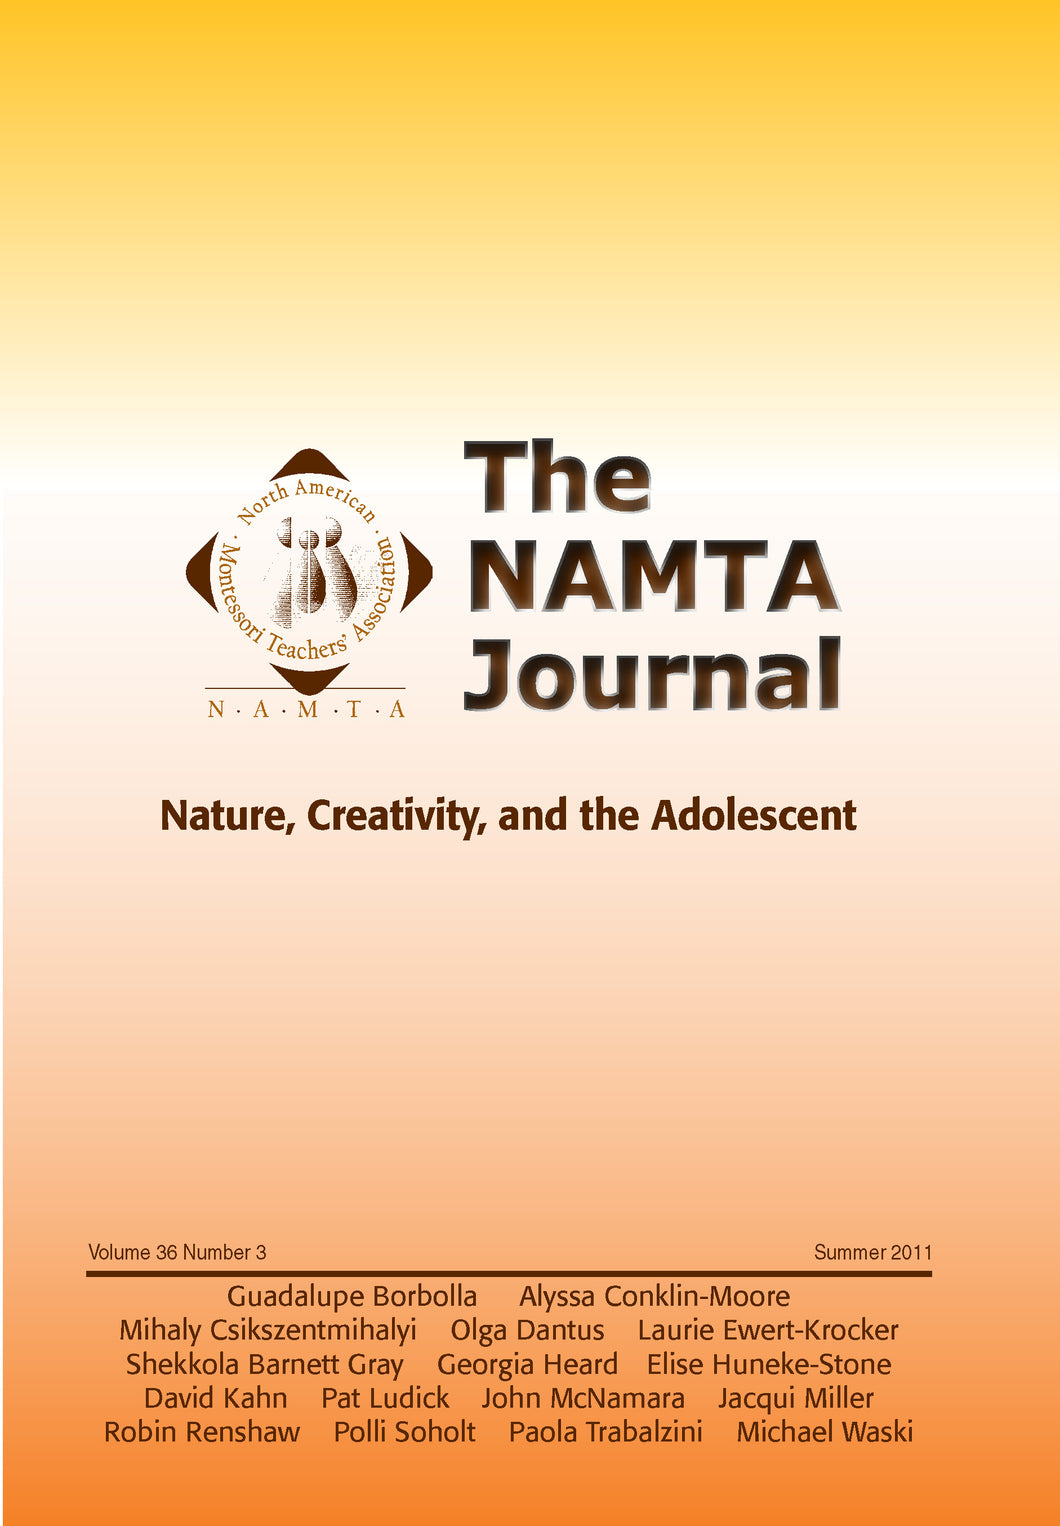 Vol 36, No 3: Nature, Creativity, and the Adolescent